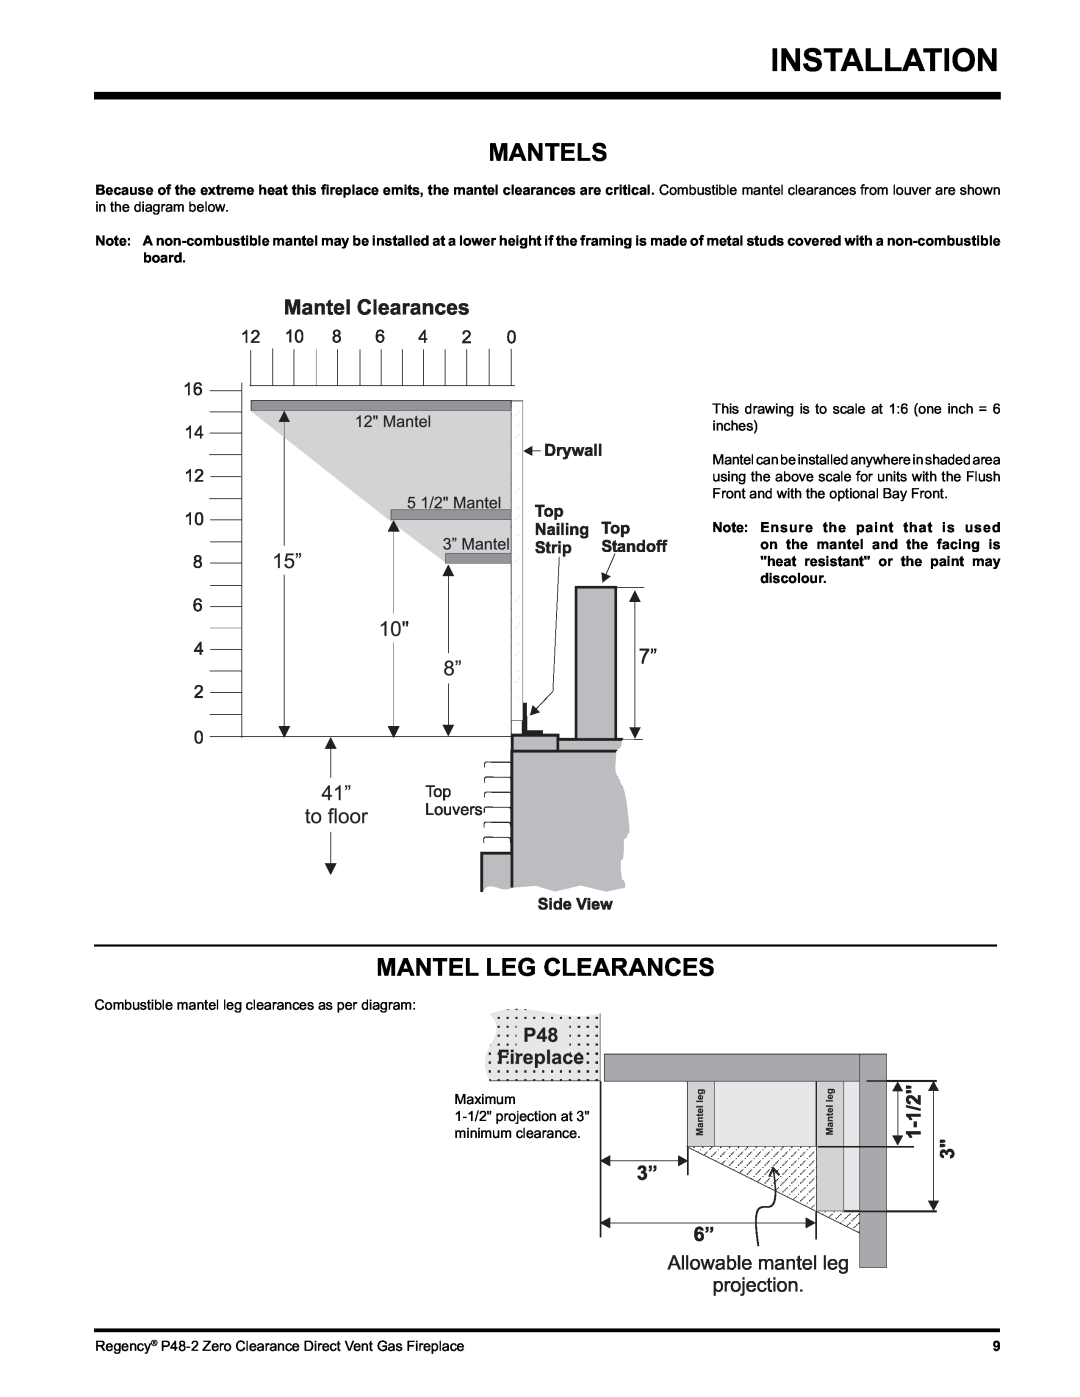 Regency P48-2 installation manual Installation, Mantels, Mantel Leg Clearances 